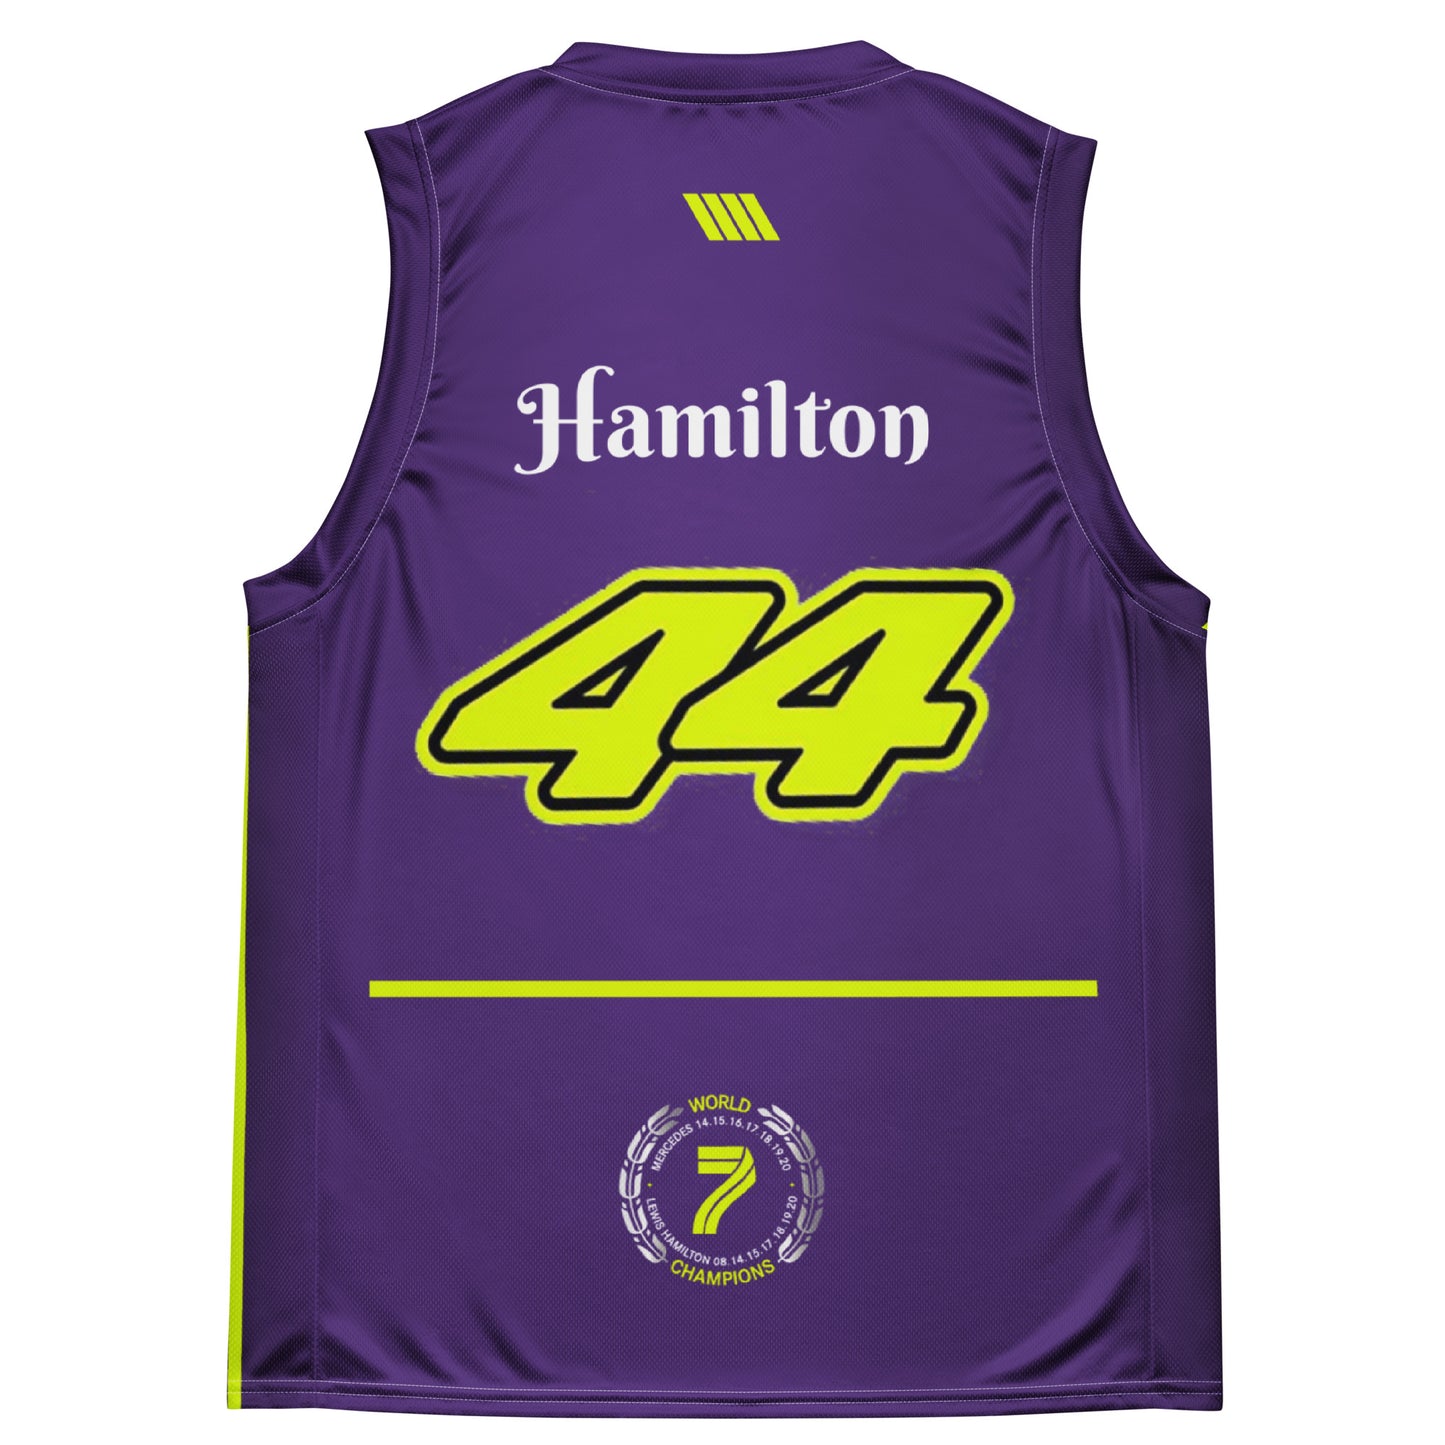 Lewis Hamilton Recycled unisex basketball jersey